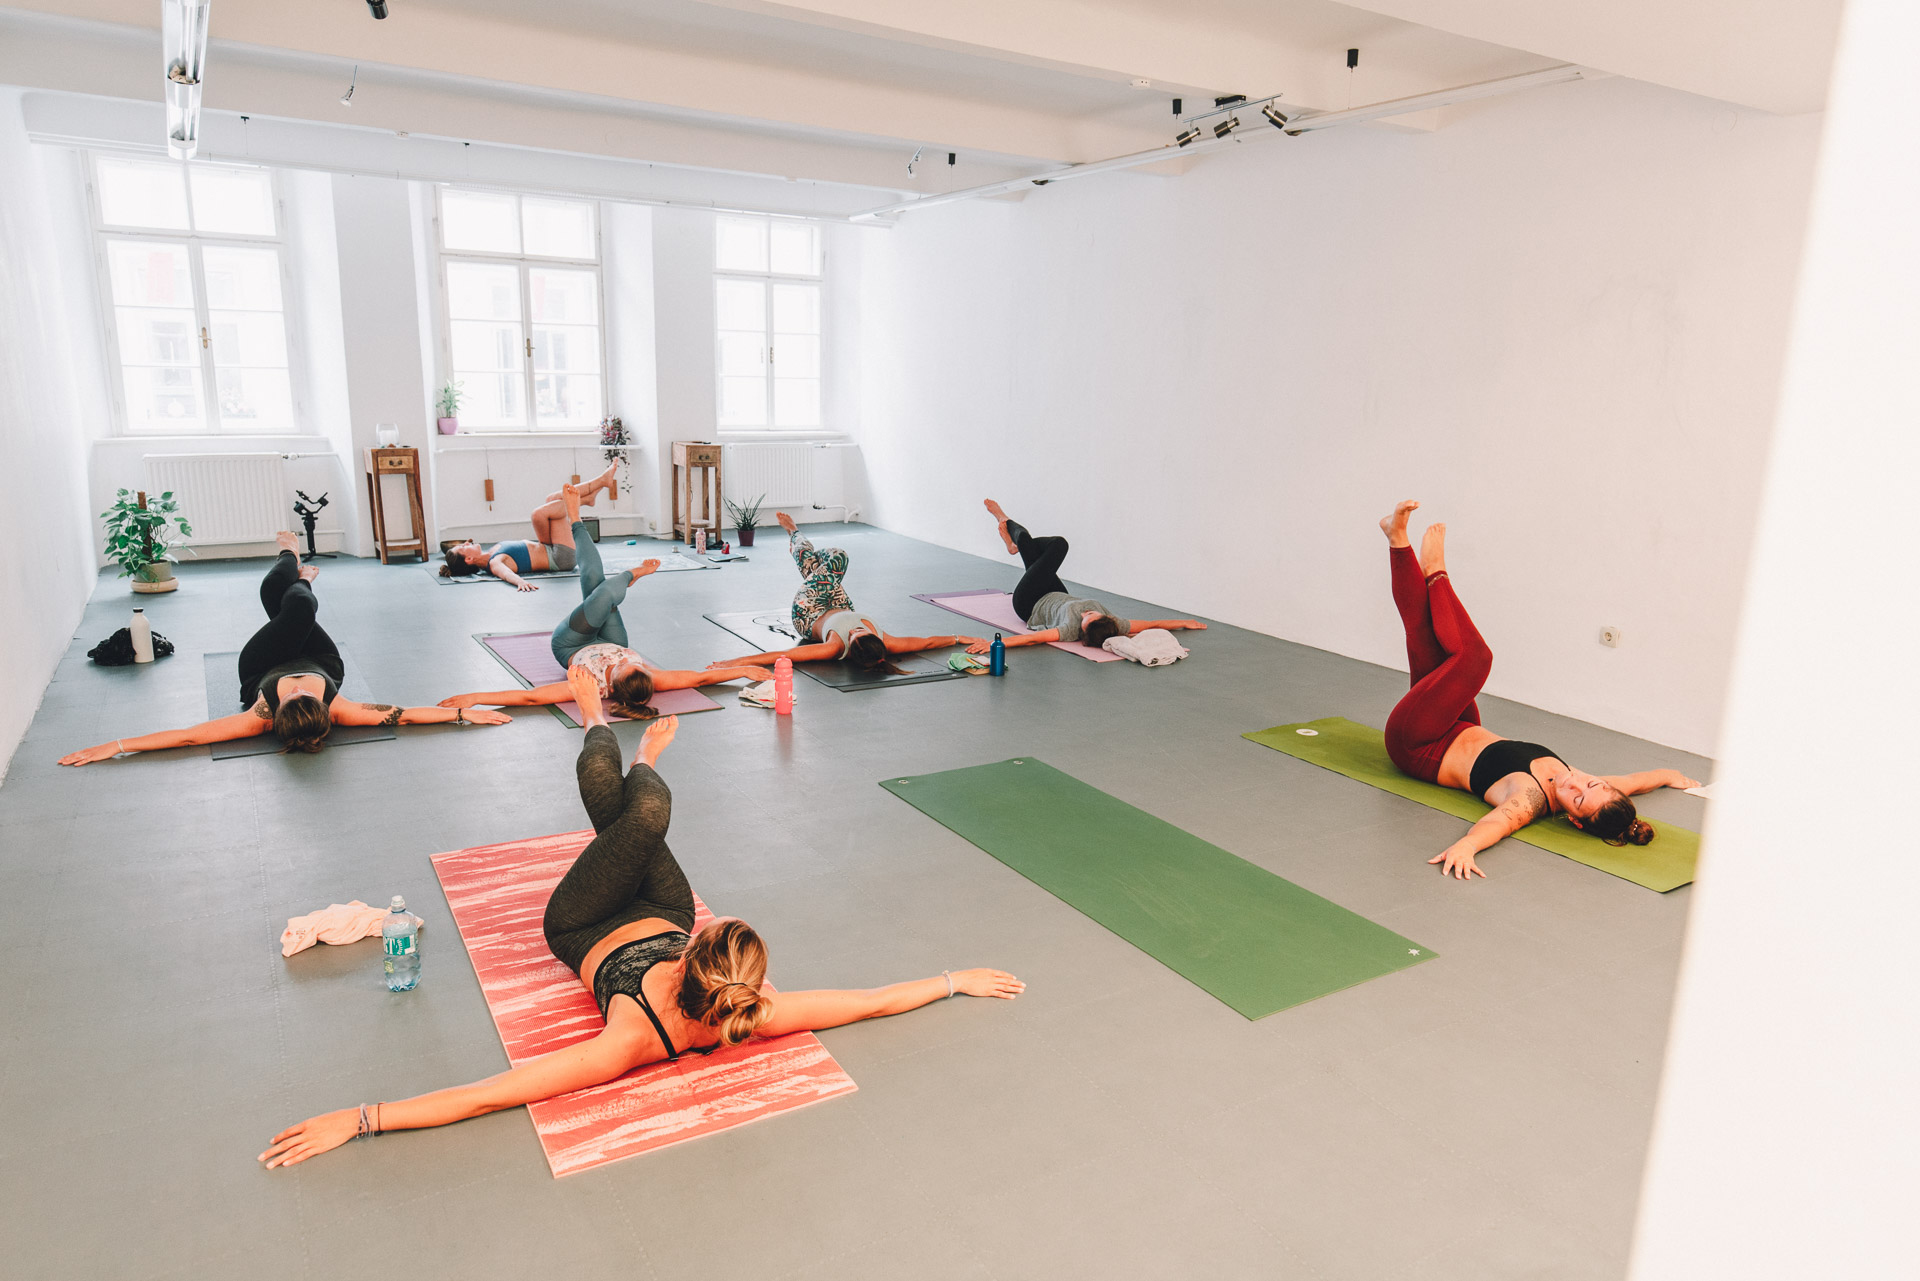 Frauen machen Yoga am Boden